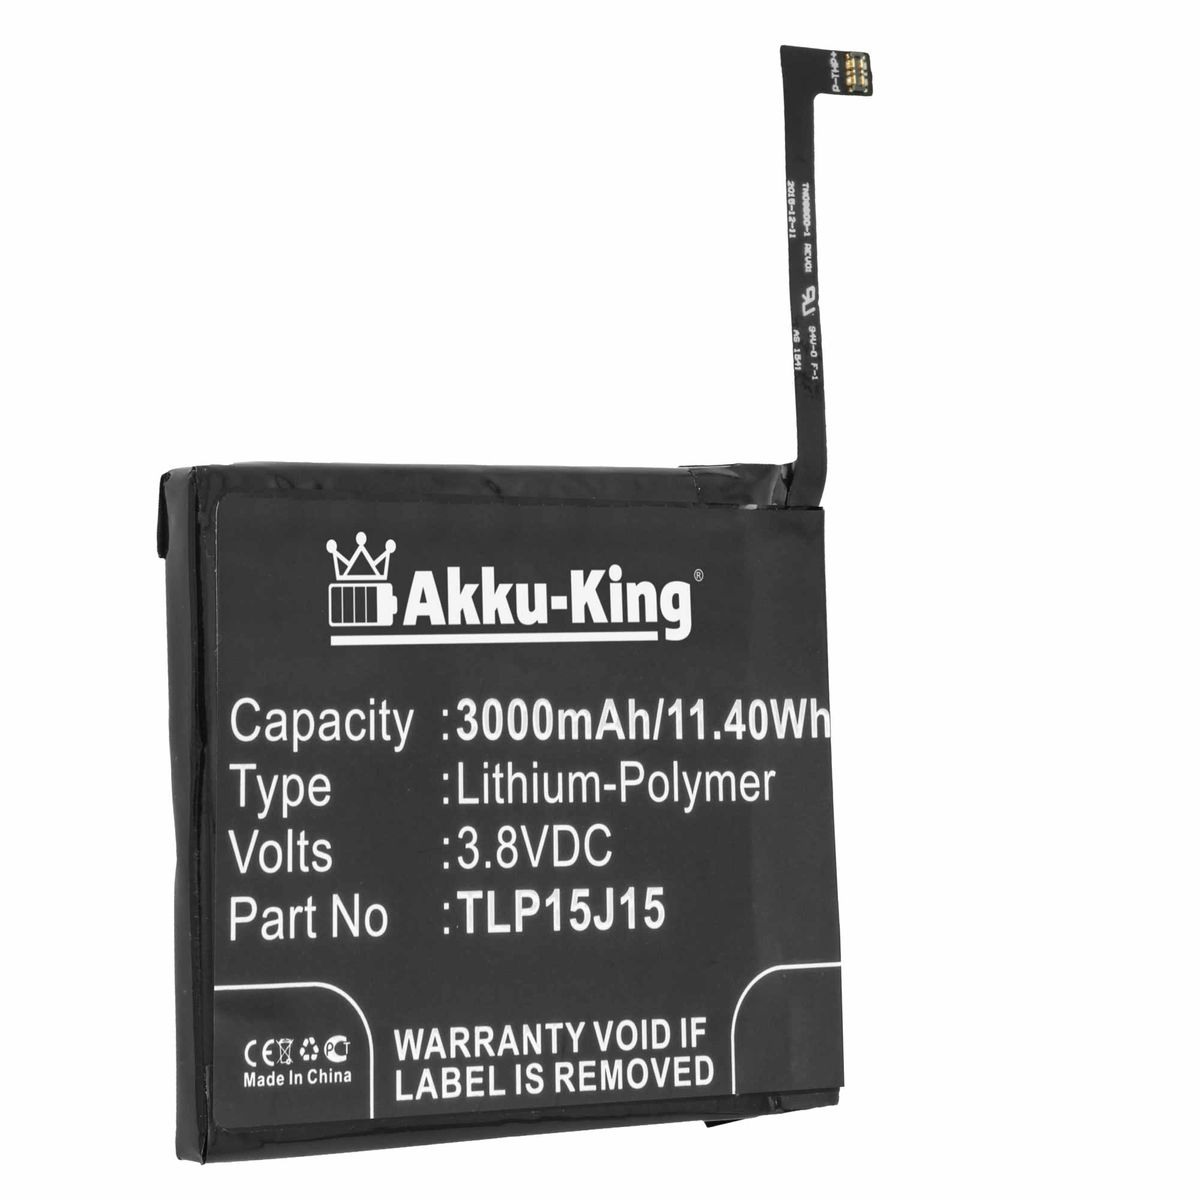 AKKU-KING Akku kompatibel mit Wiko Volt, Li-Polymer Handy-Akku, TLP15J15 3.8 3000mAh